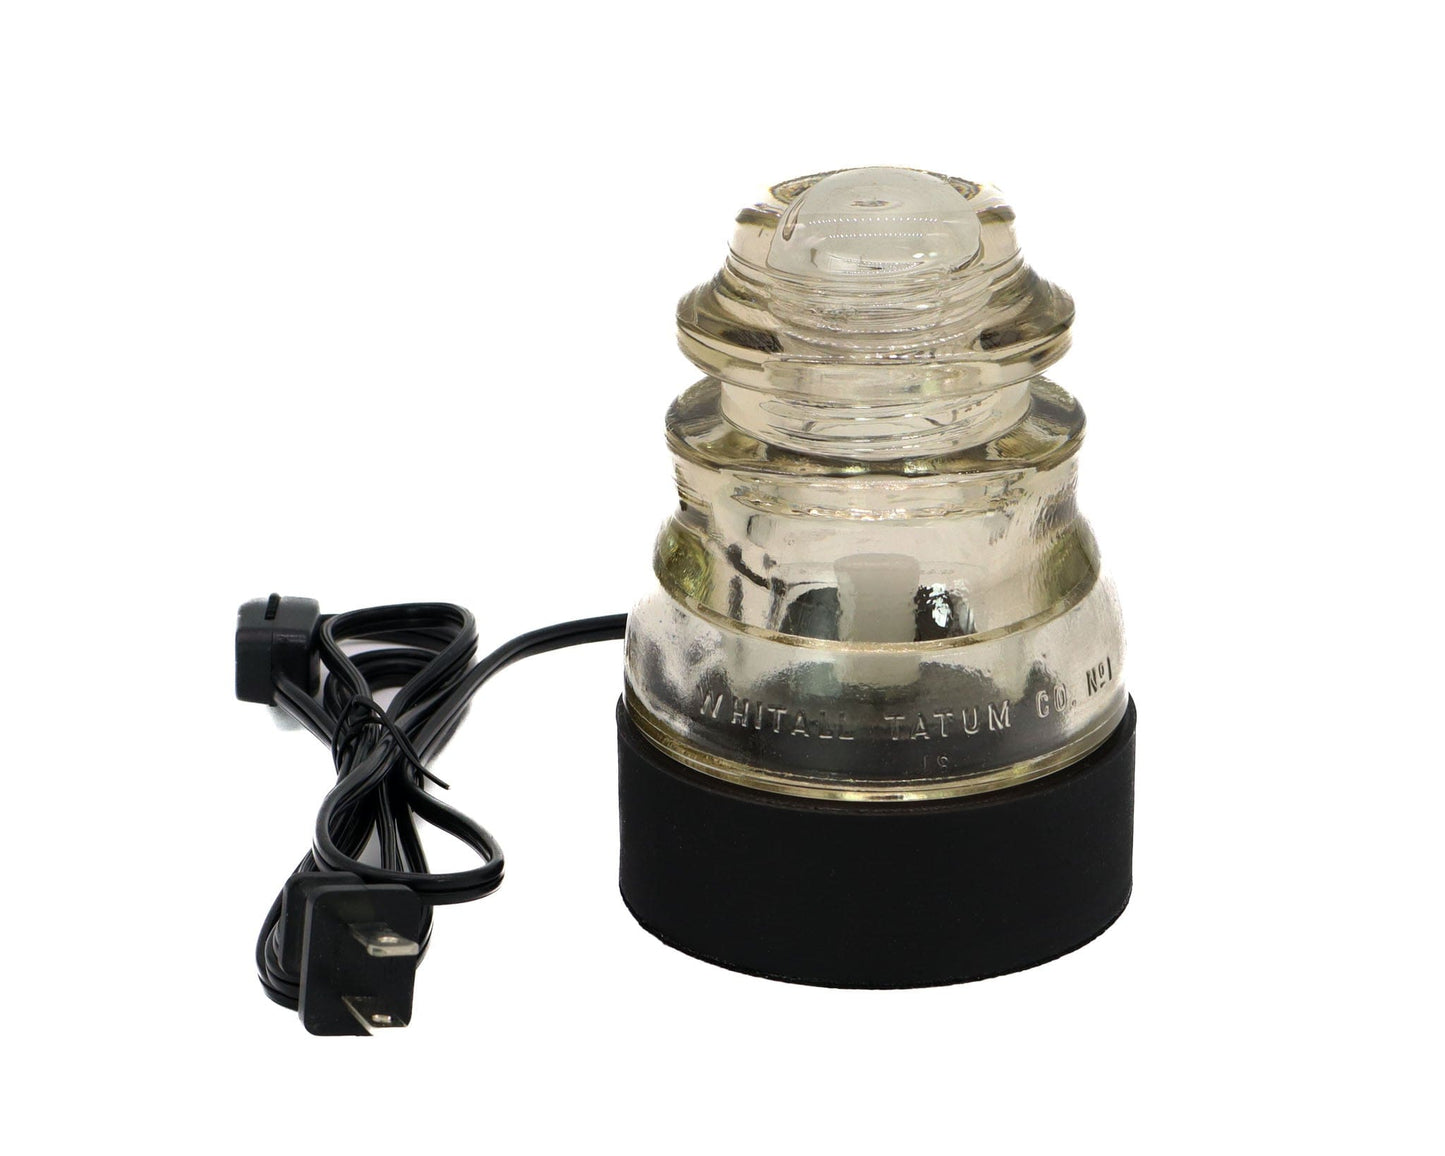 LightAndTimeArt Lamp base Lamp Base for WHITALL TATUM CO. NO 1 Glass Insulators, Industrial Lighting, Man Cave Decor